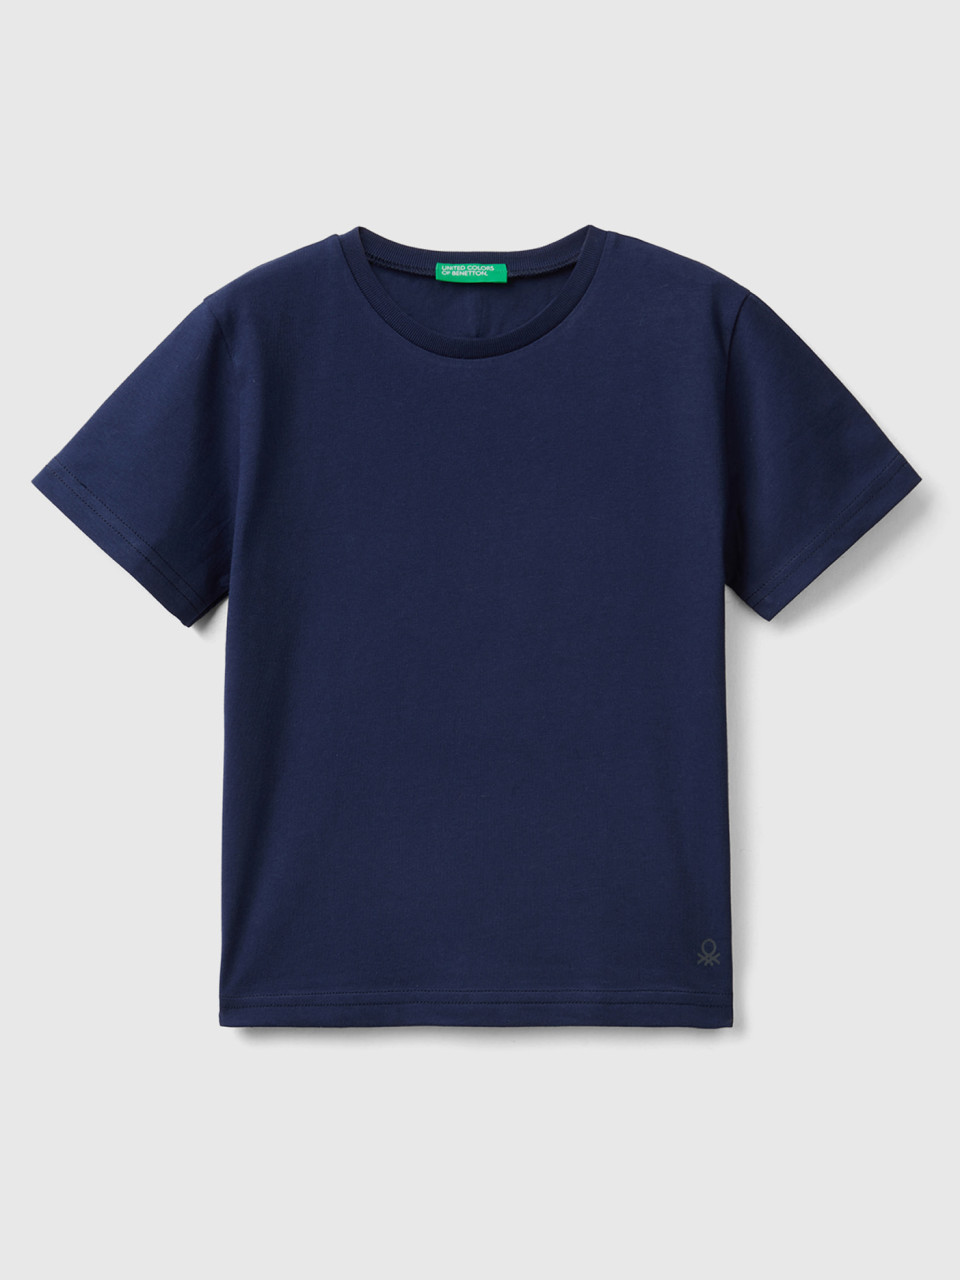 Benetton, T-shirt In Organic Cotton, Dark Blue, Kids